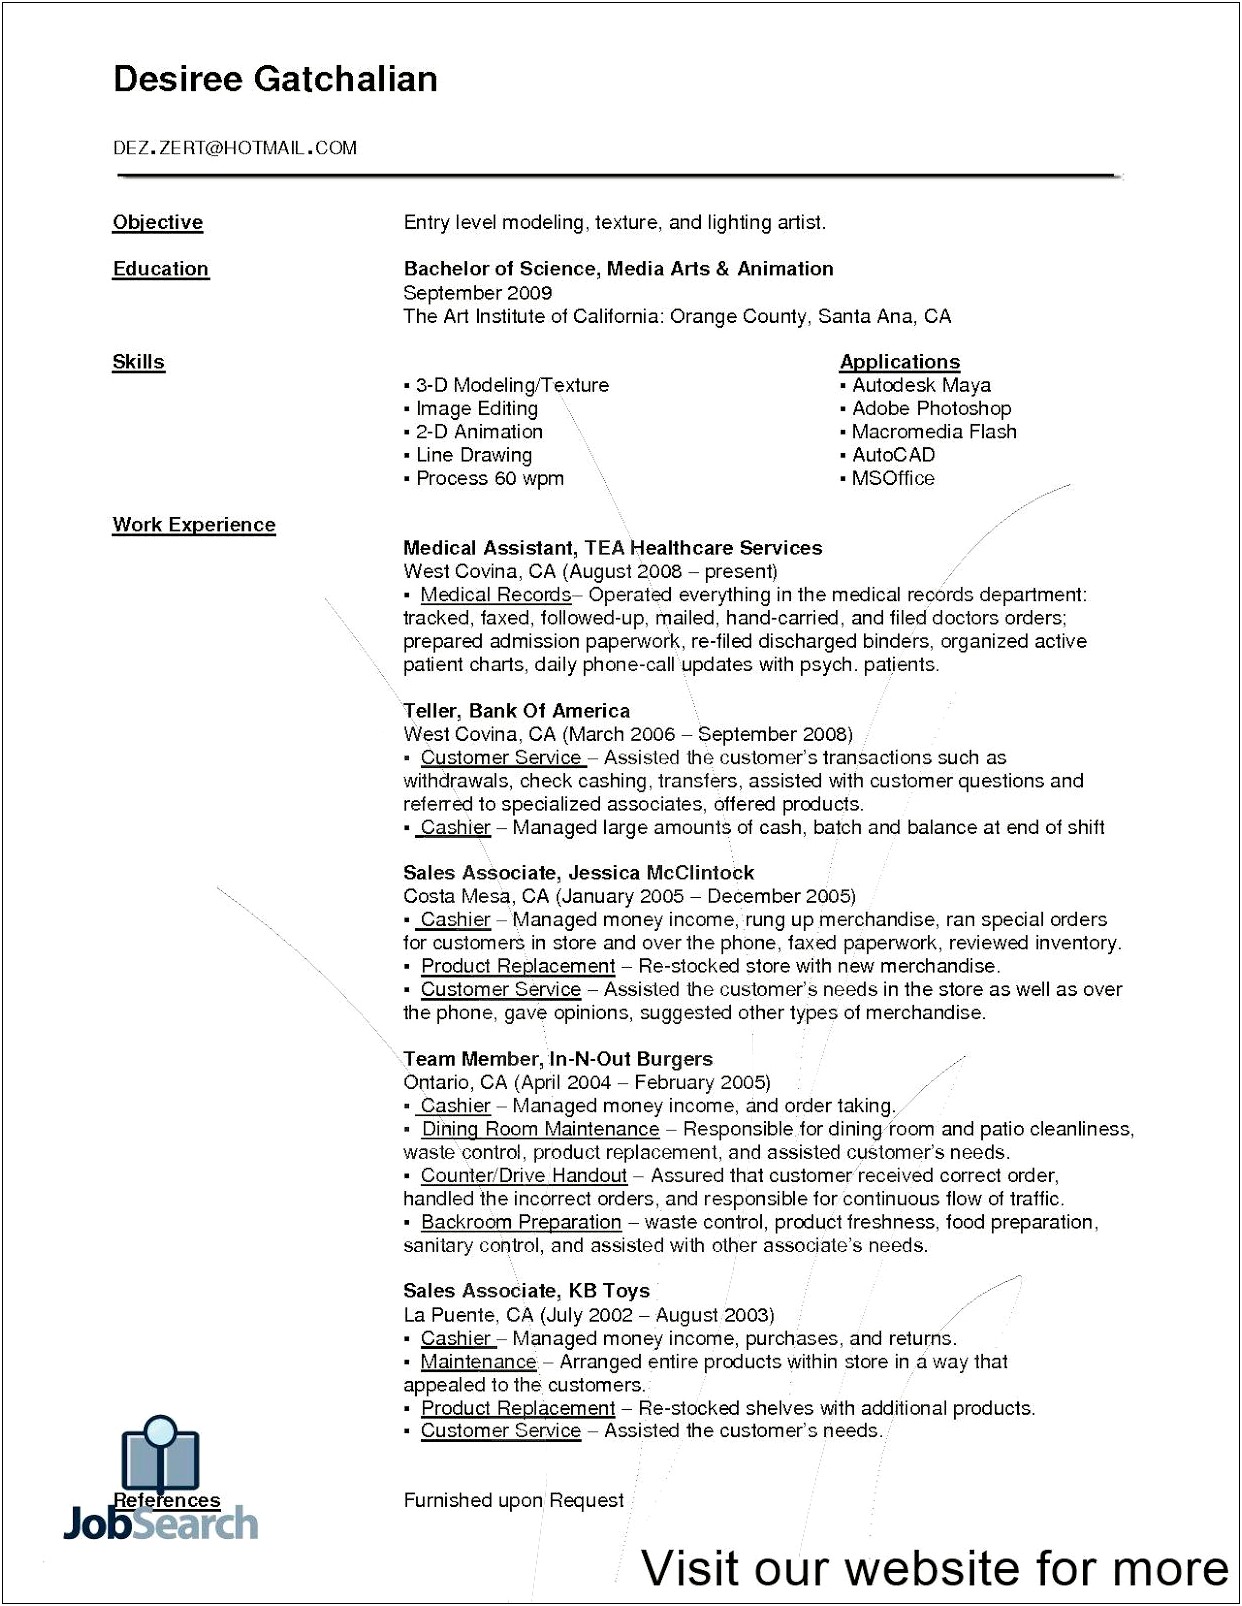 Sample Resume Format For Bank Jobs